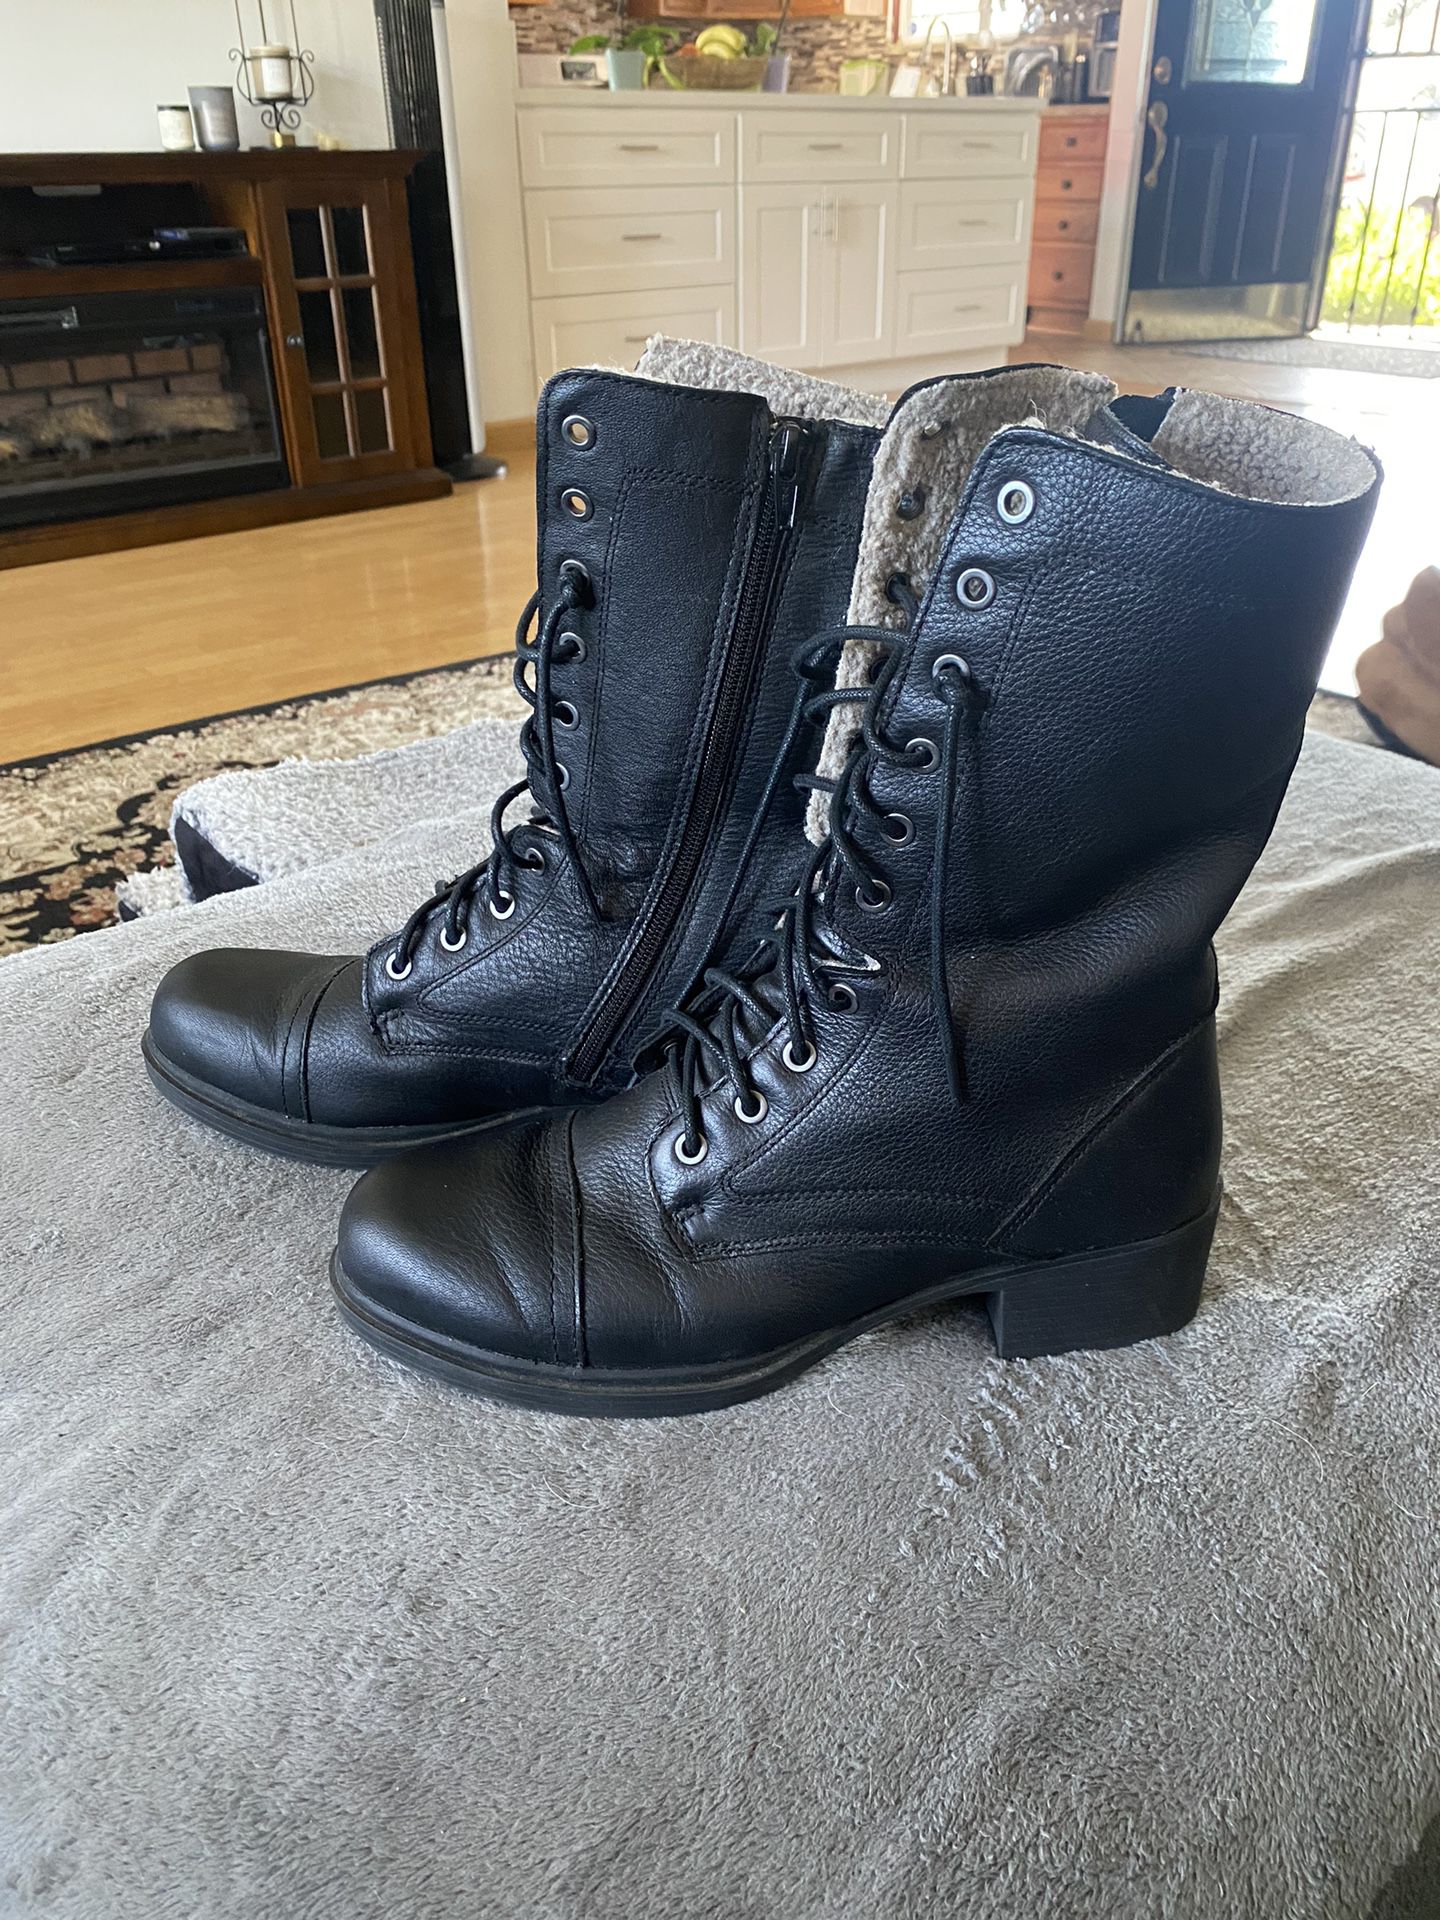 Cougar Waterproof Black Boots, Size Women’s 9